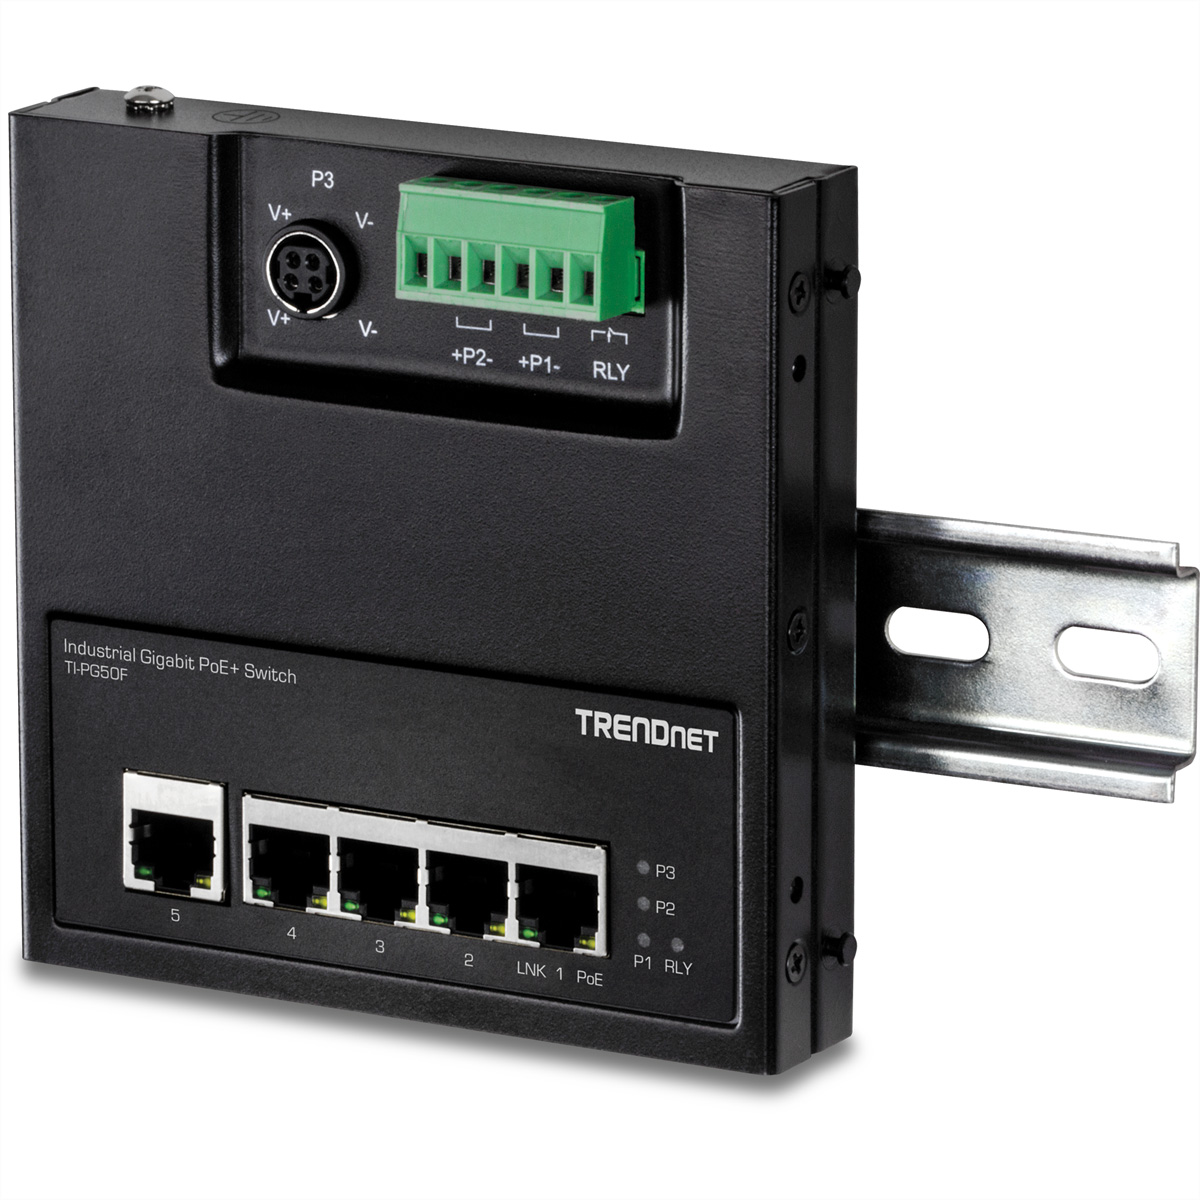 TRENDNET TI-PG50F 5-Port Switch Gigabit Gigabit PoE Industrial PoE+ Front Switch Access